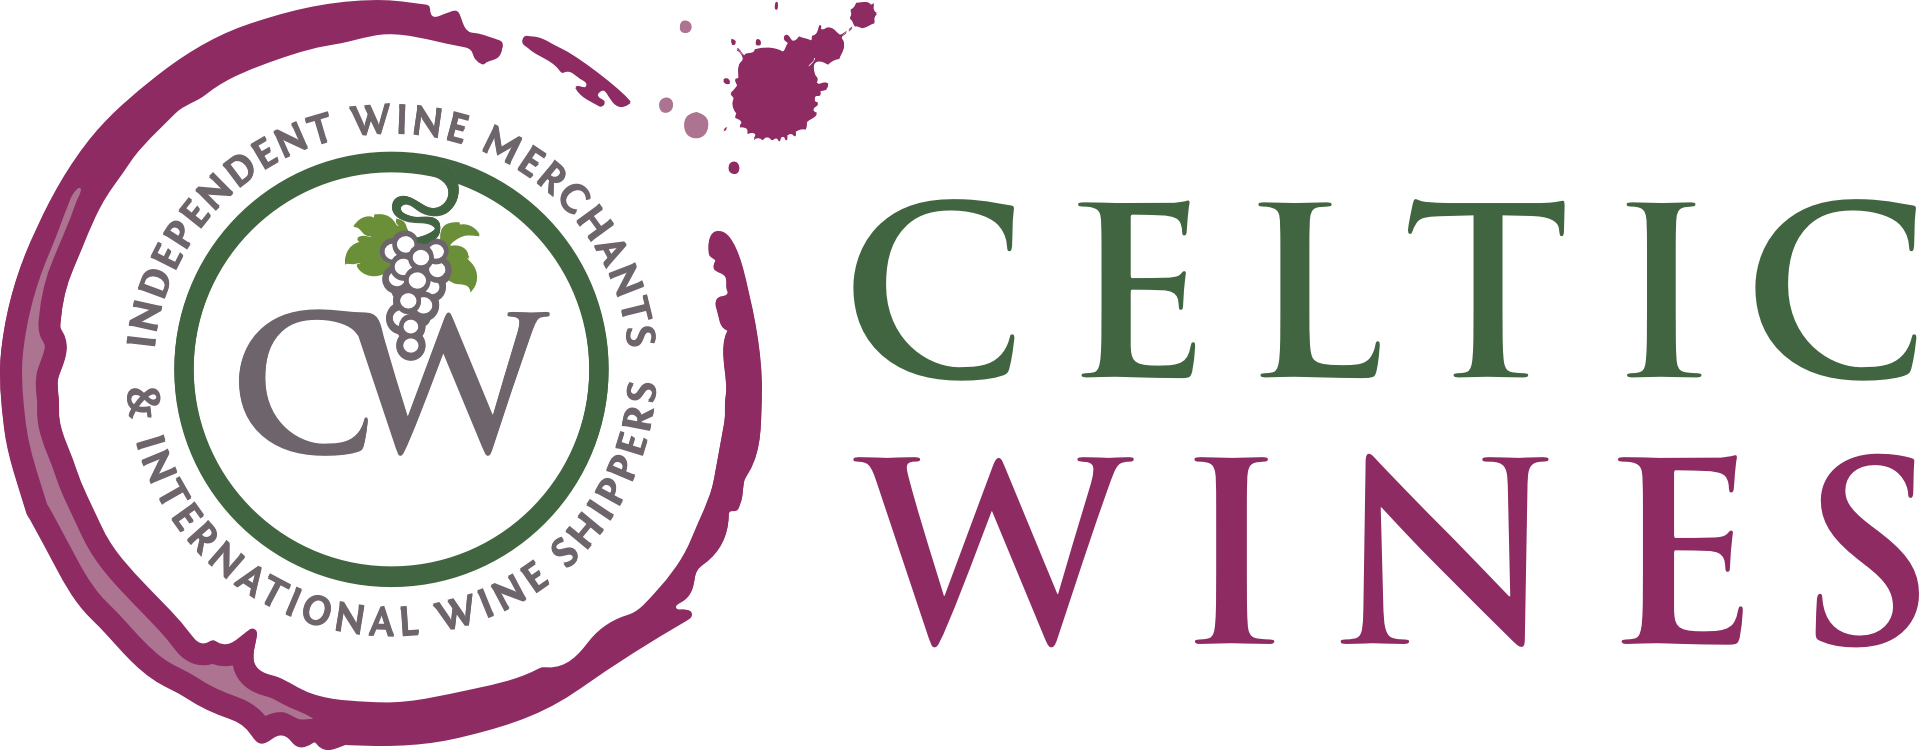 celtic wines logo